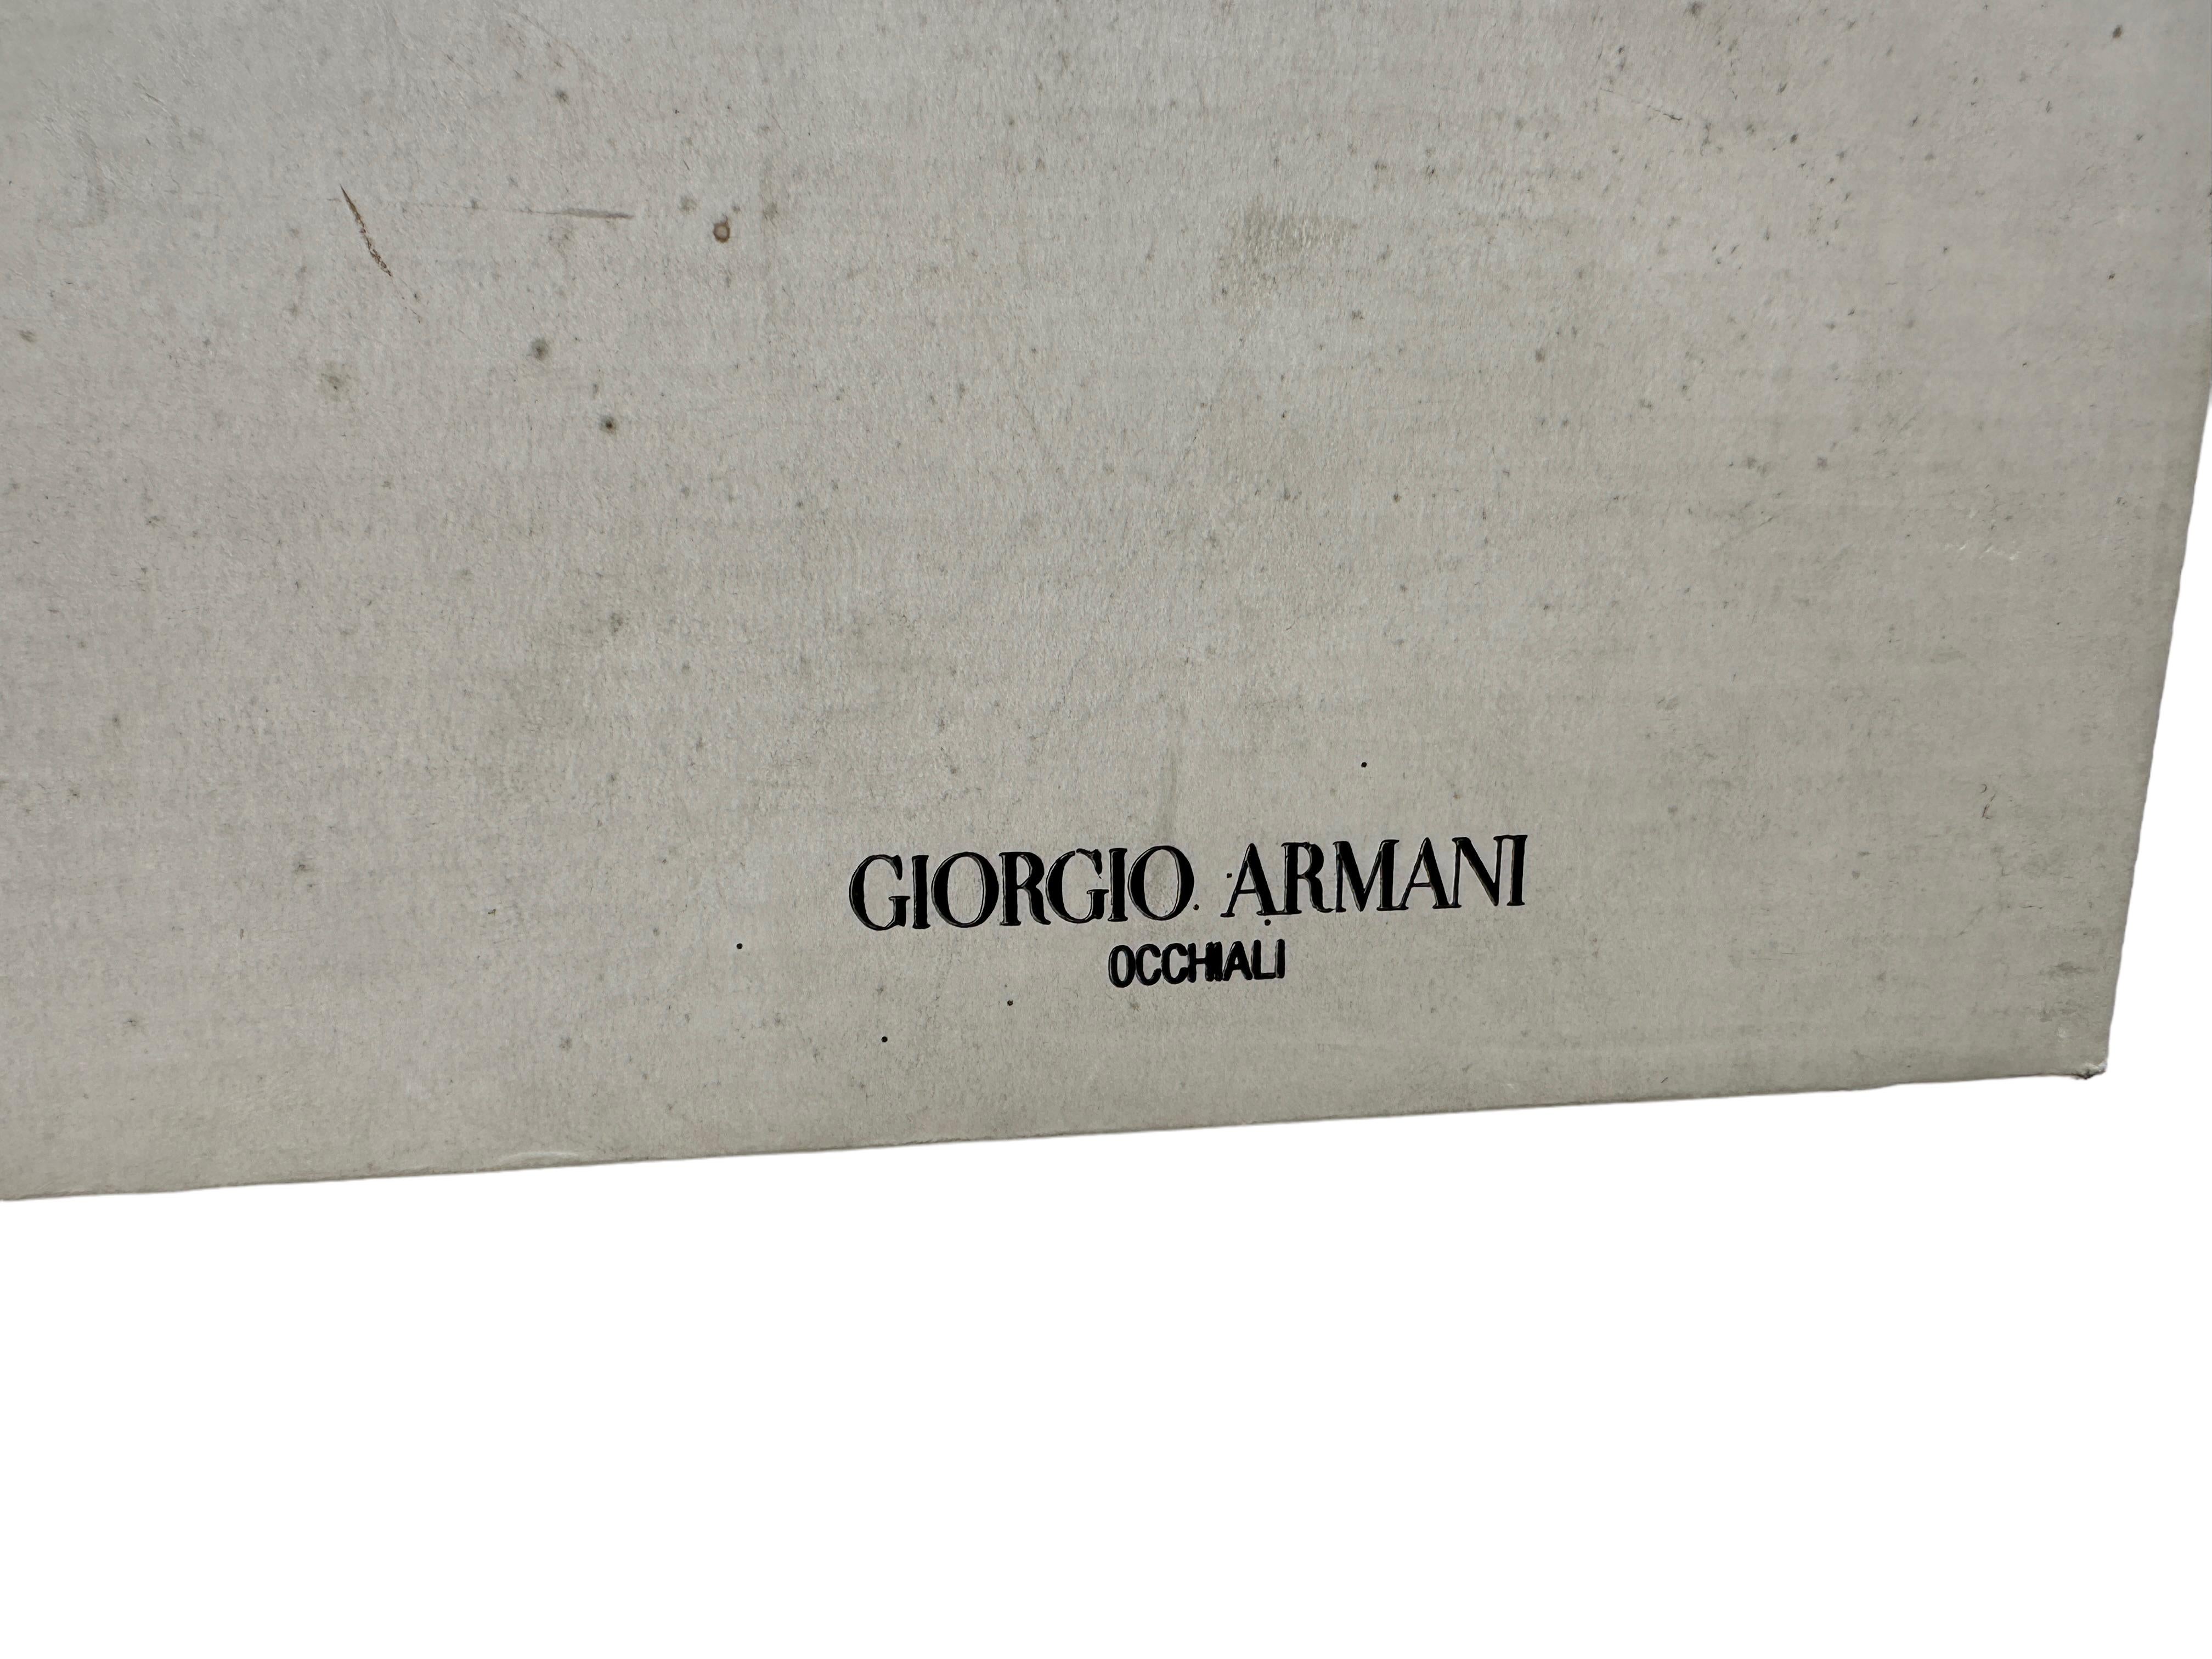 Large Mid-Century Italian Giorgio Armani Eye Glasses Factice Shop Display Piece For Sale 6